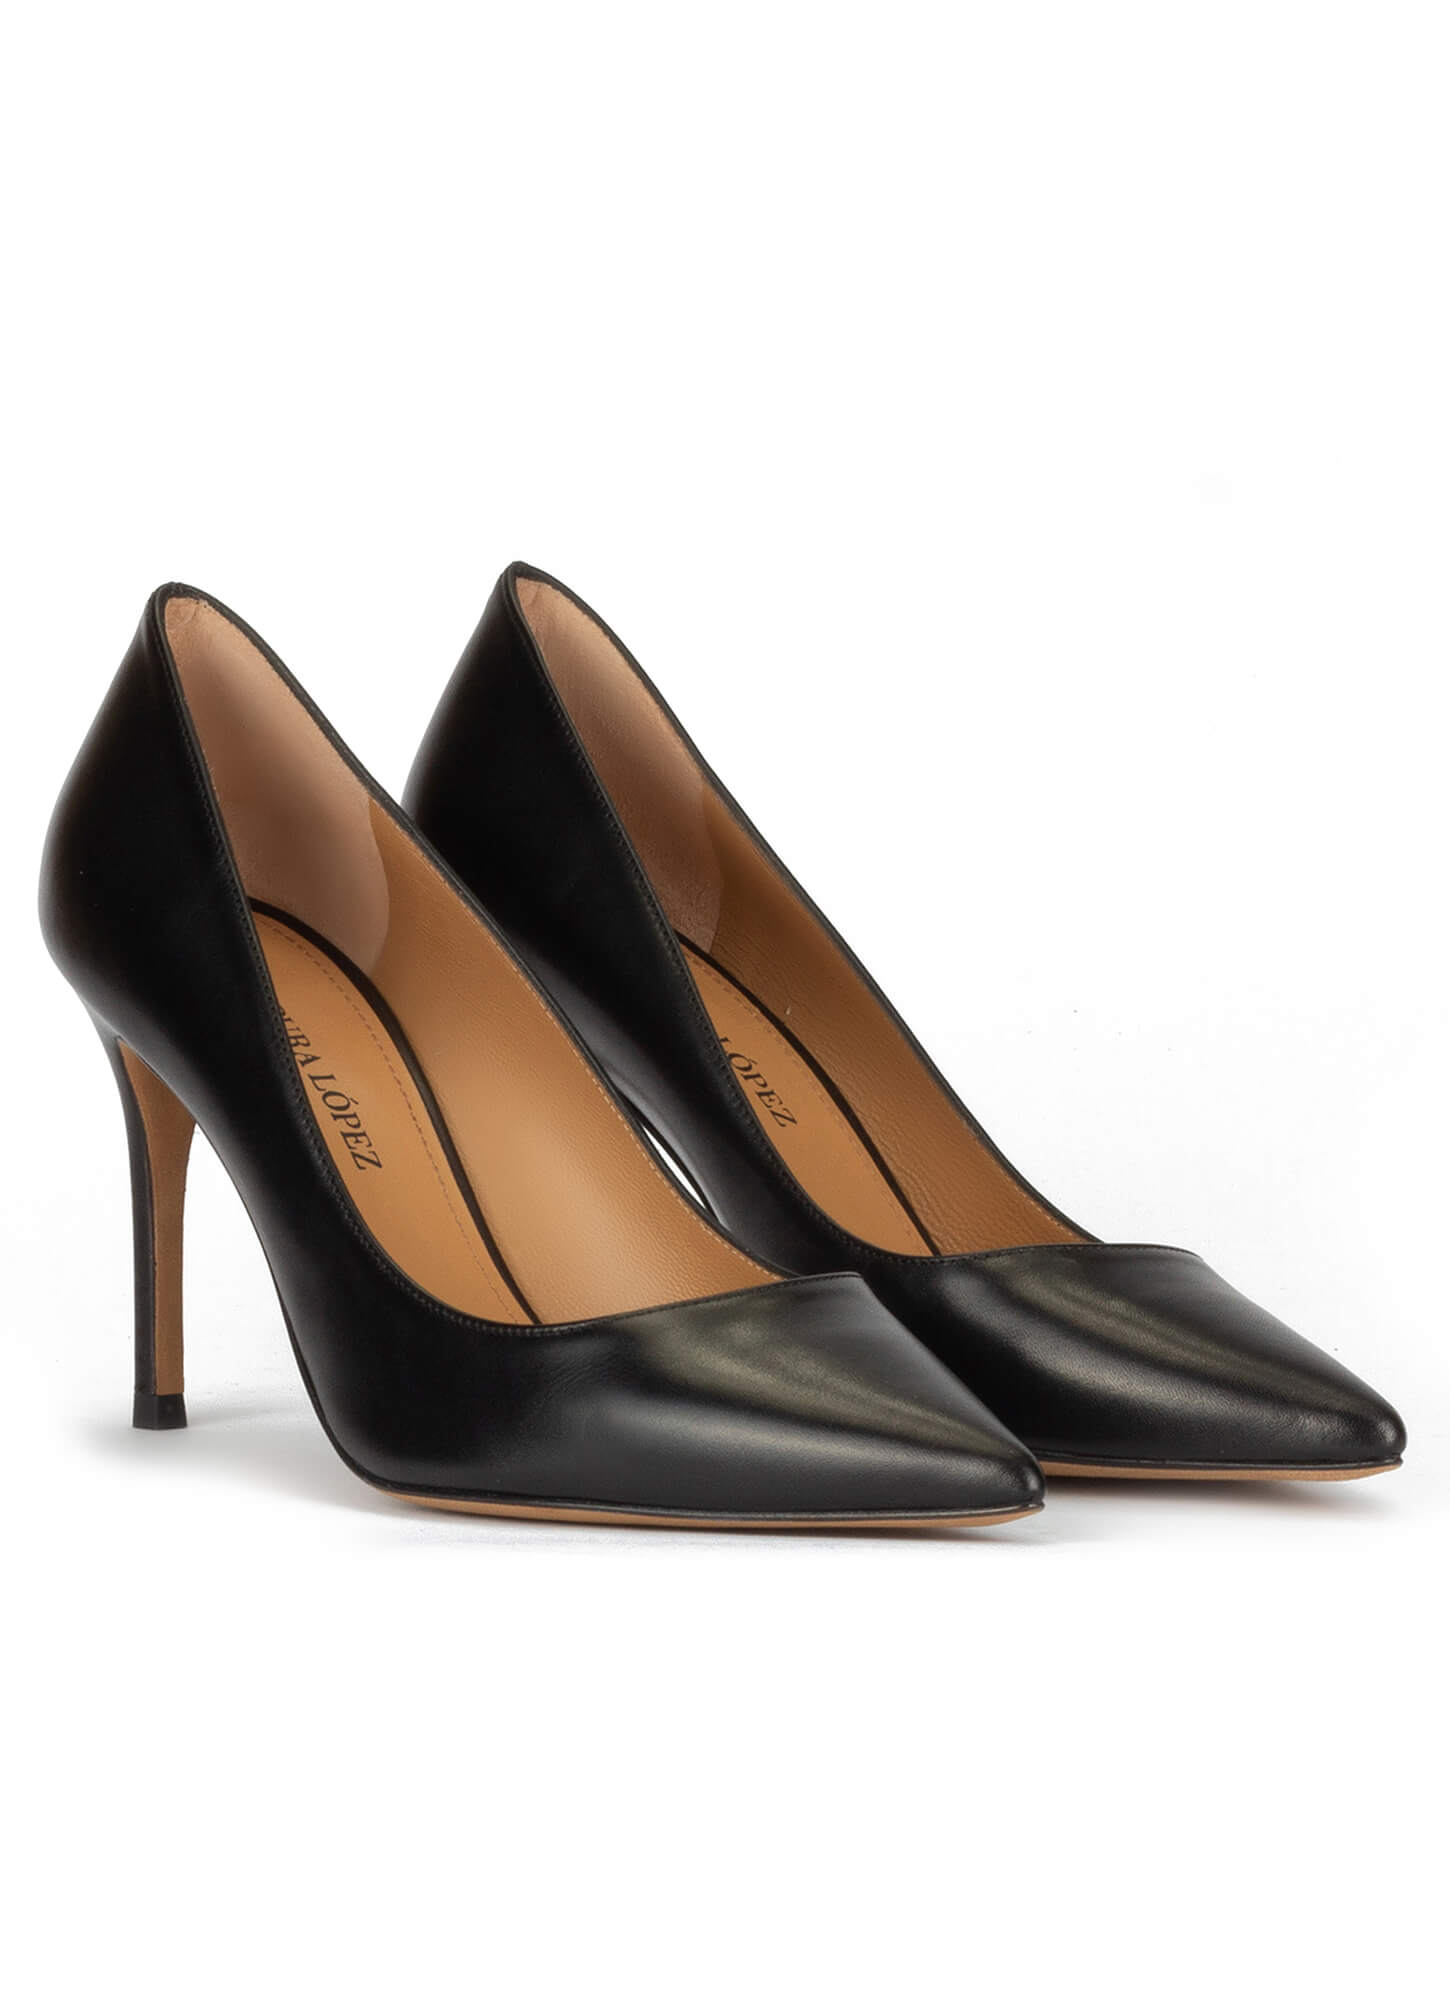 Black leather stiletto heel point-toe 